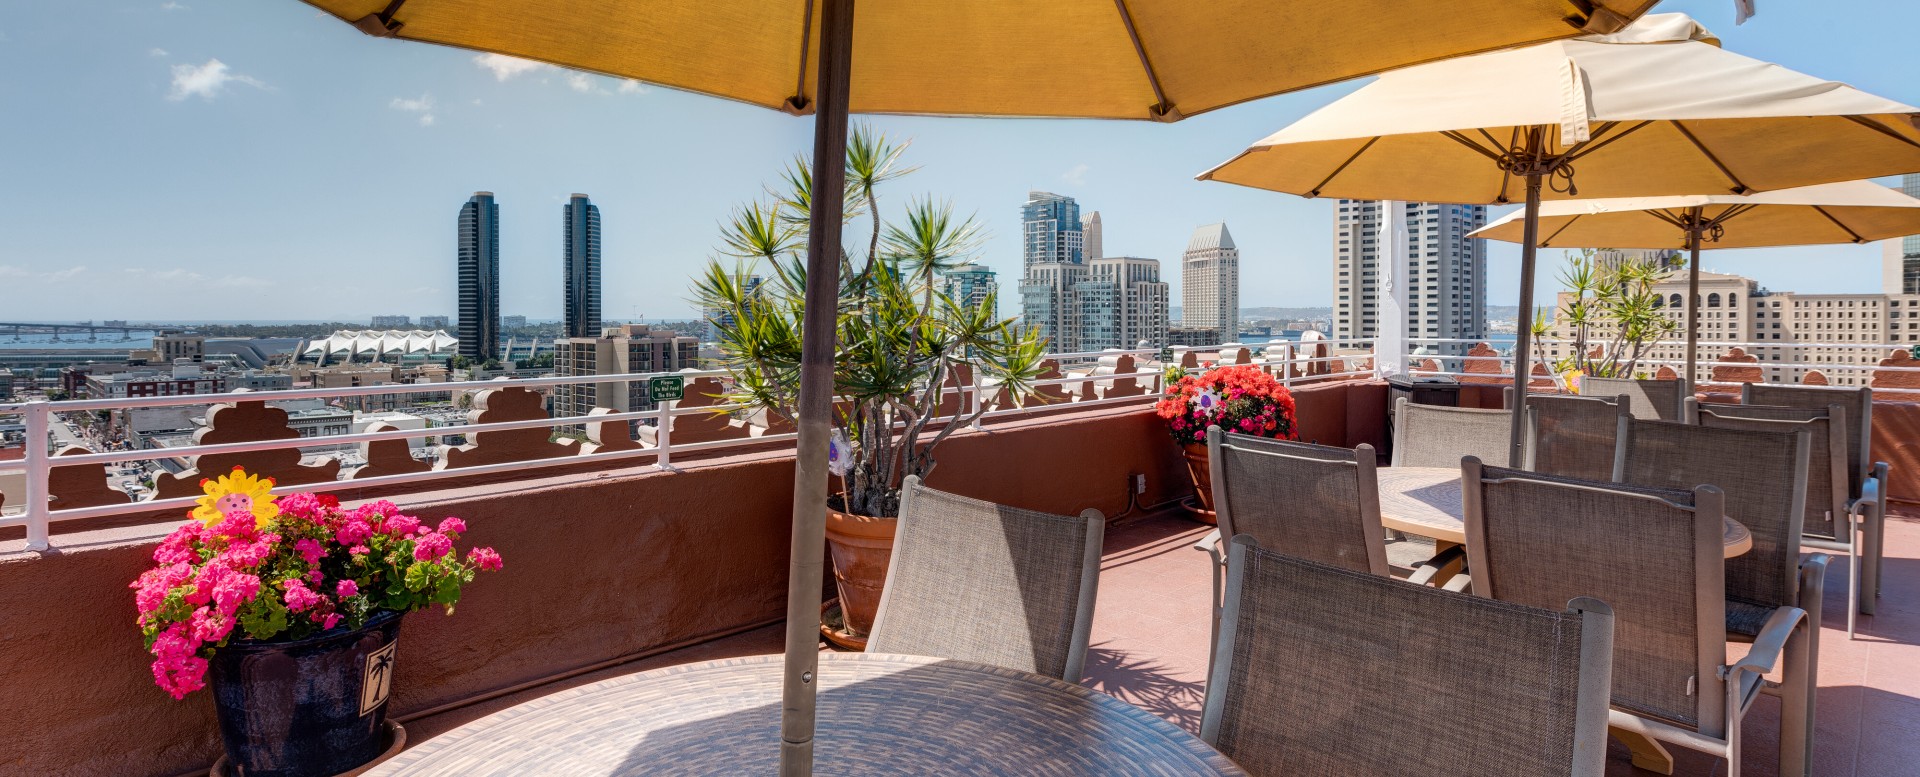 Gaslamp Plaza Suites San Diego - rooftop breakfast area